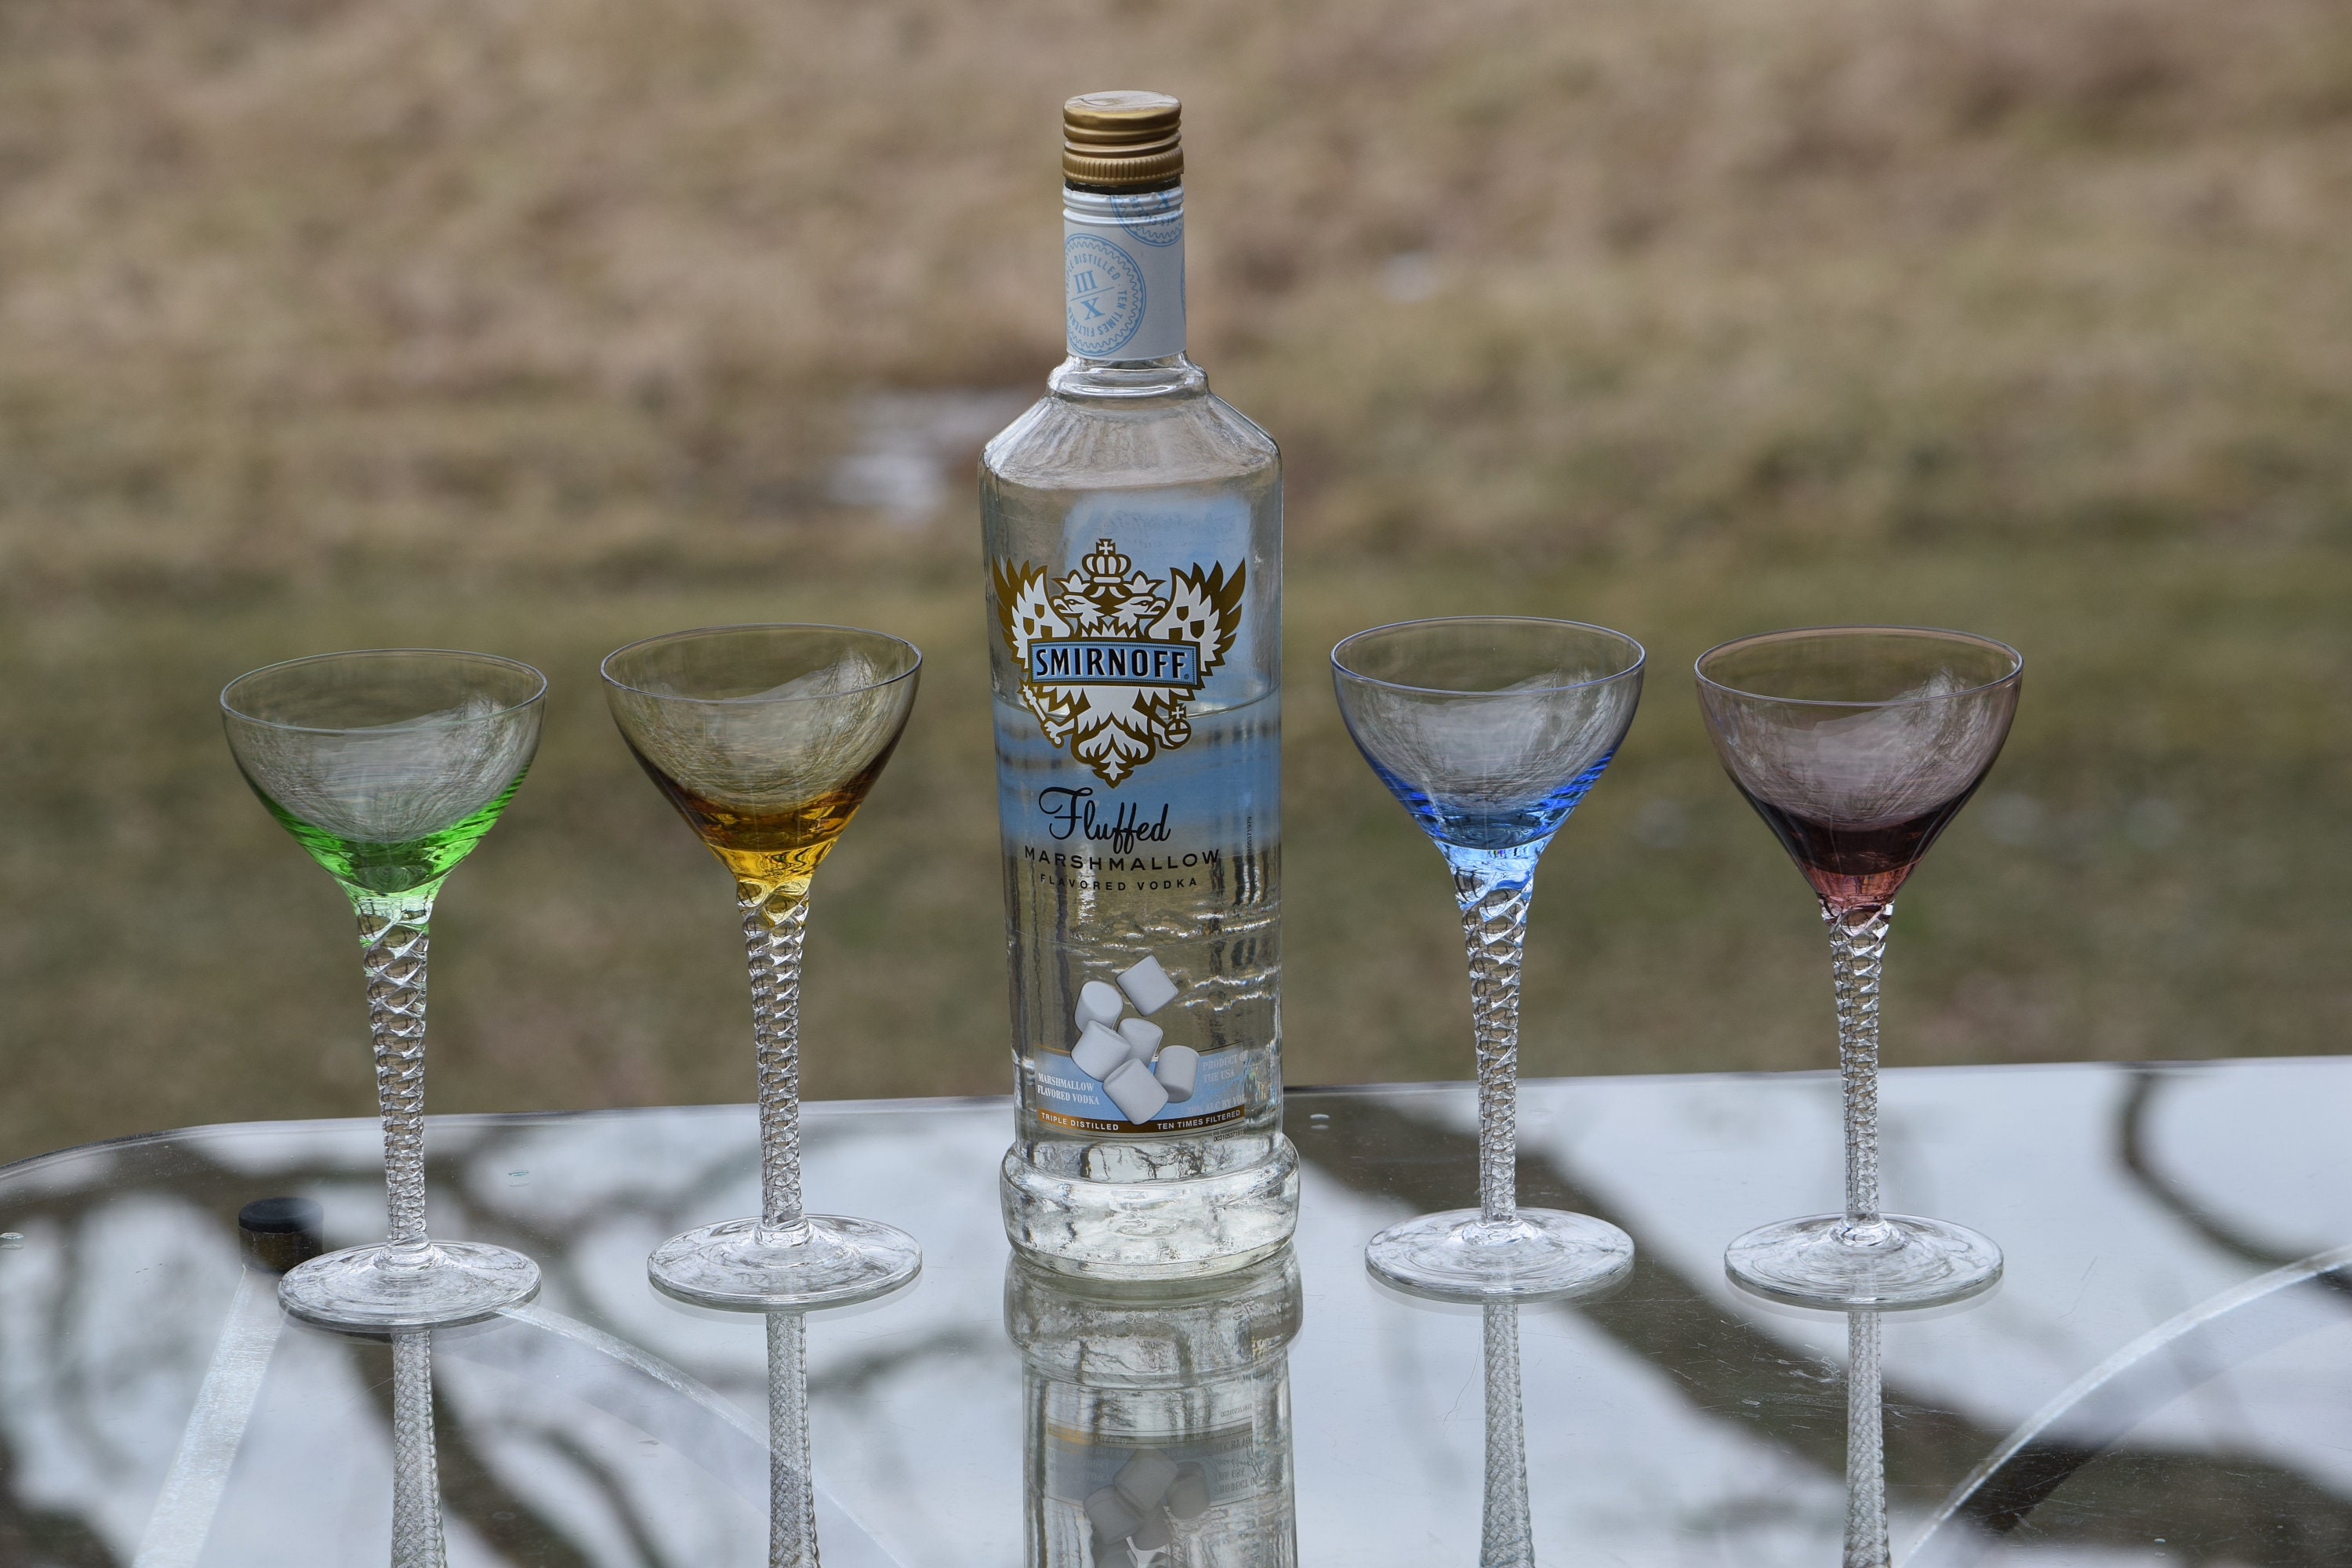 Vintage Multi Colored Twisted Stem Wine Glasses Set of 4, 4 oz Wine Glasses,  Vintage 4 oz Cocktail Glasses, Unique Wine Glasses